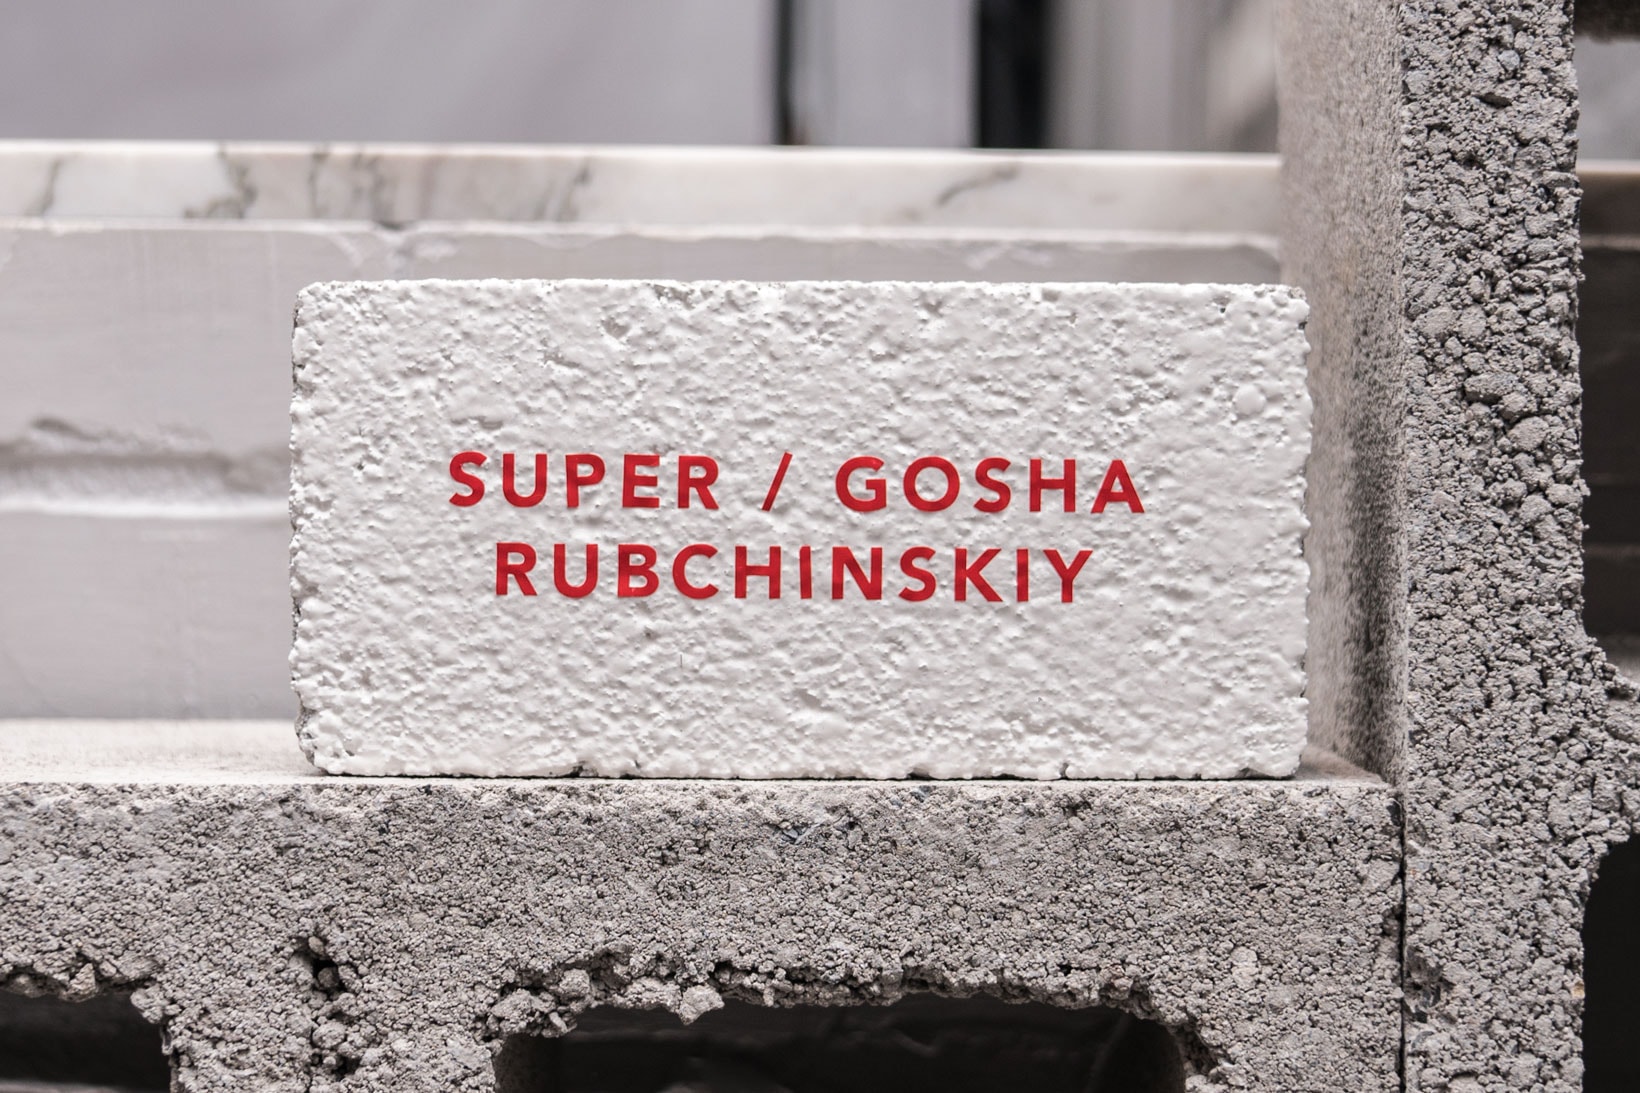 Gosha Rubchinskiy SUPER by RETROSUPERFUTURE